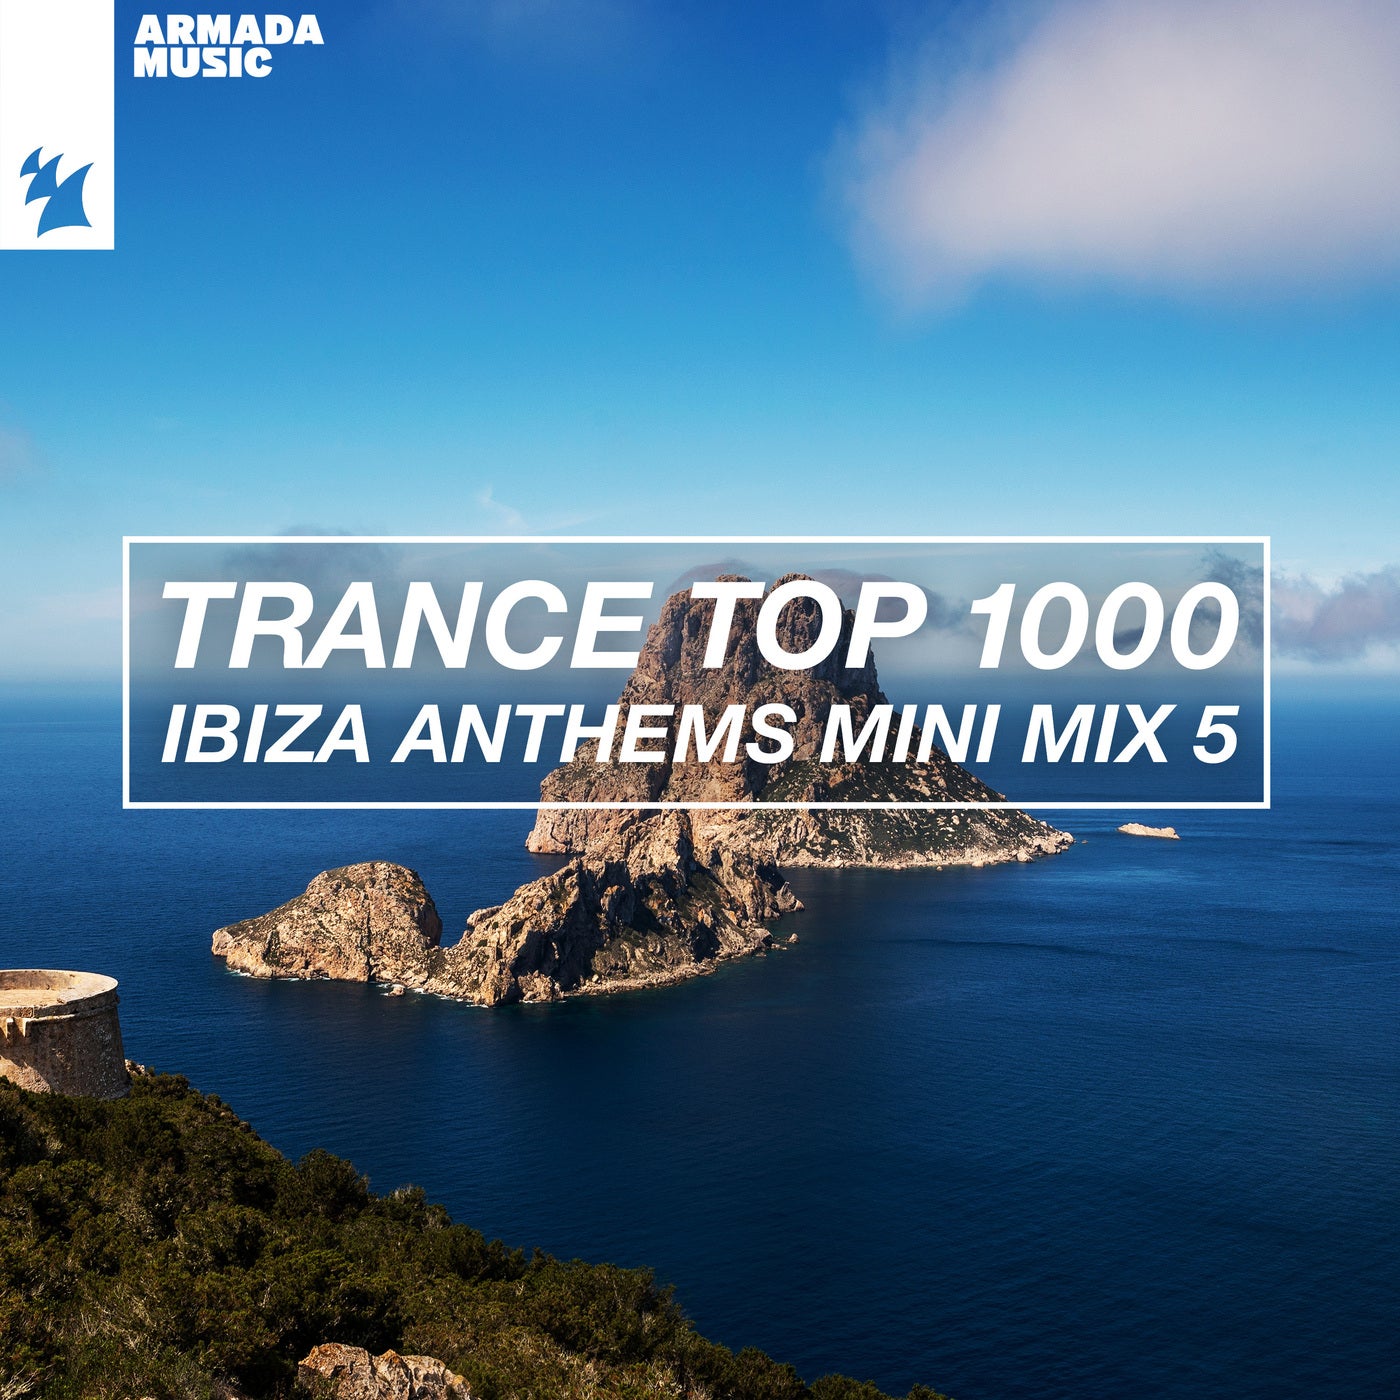 Trance Top 1000 - Ibiza Anthems Mini Mix 5